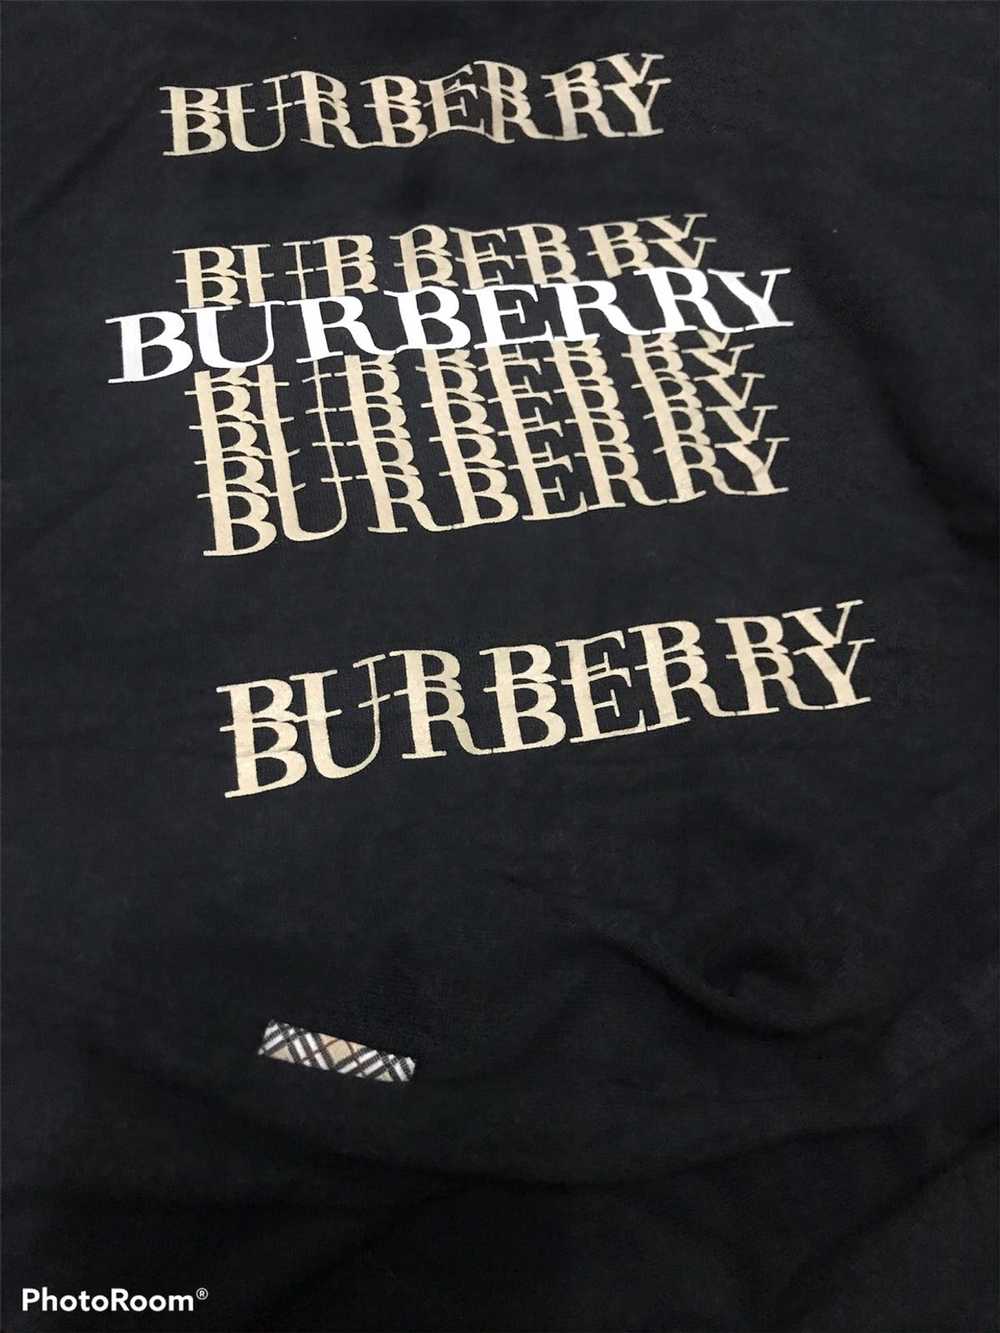 Burberry Burberry london - image 2